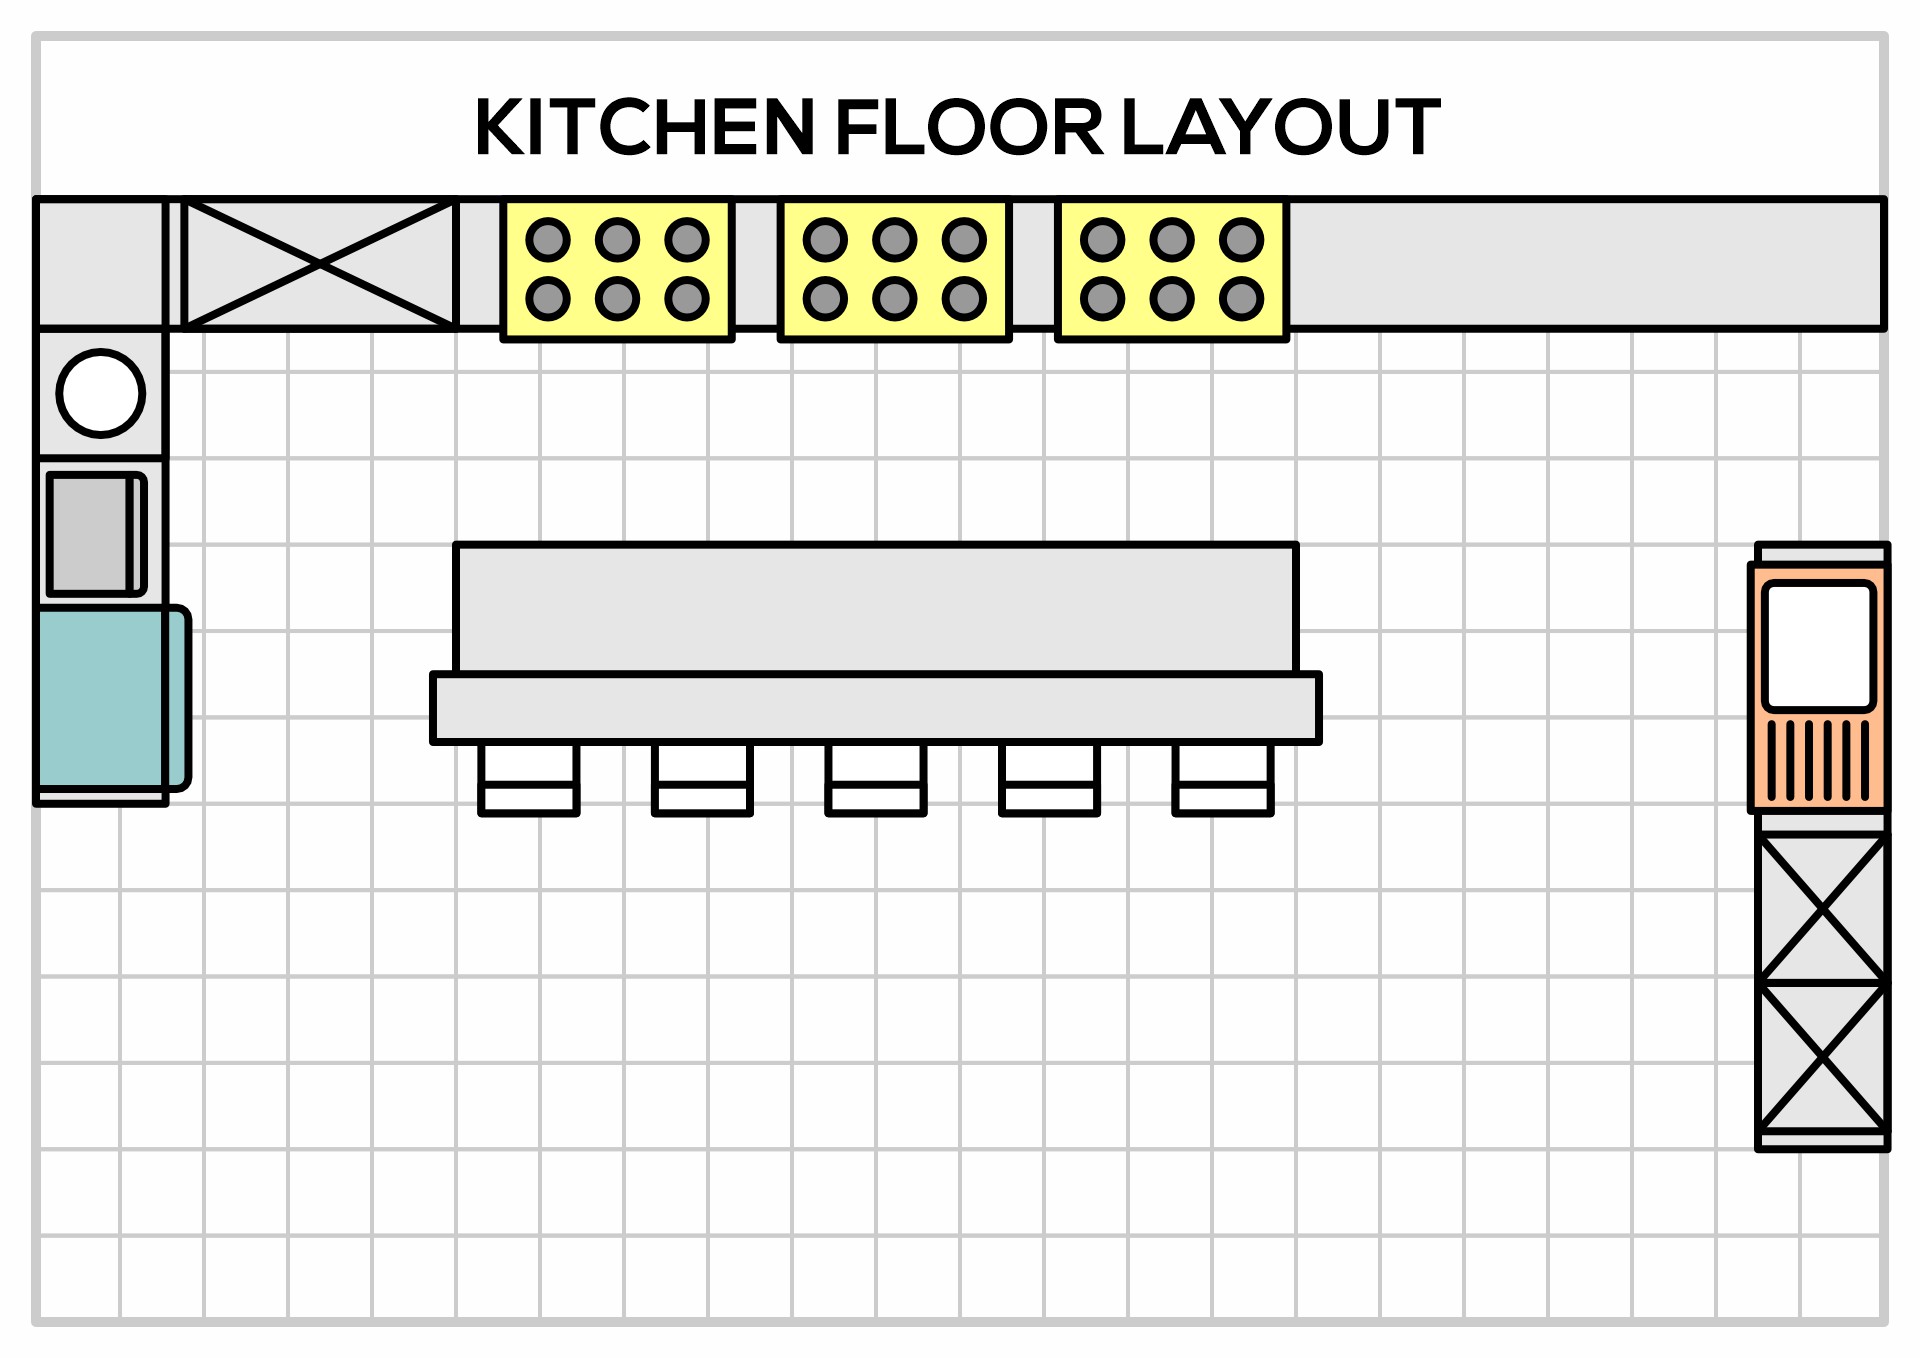 11 X 11 Kitchen Floor Plans - floorplans.click